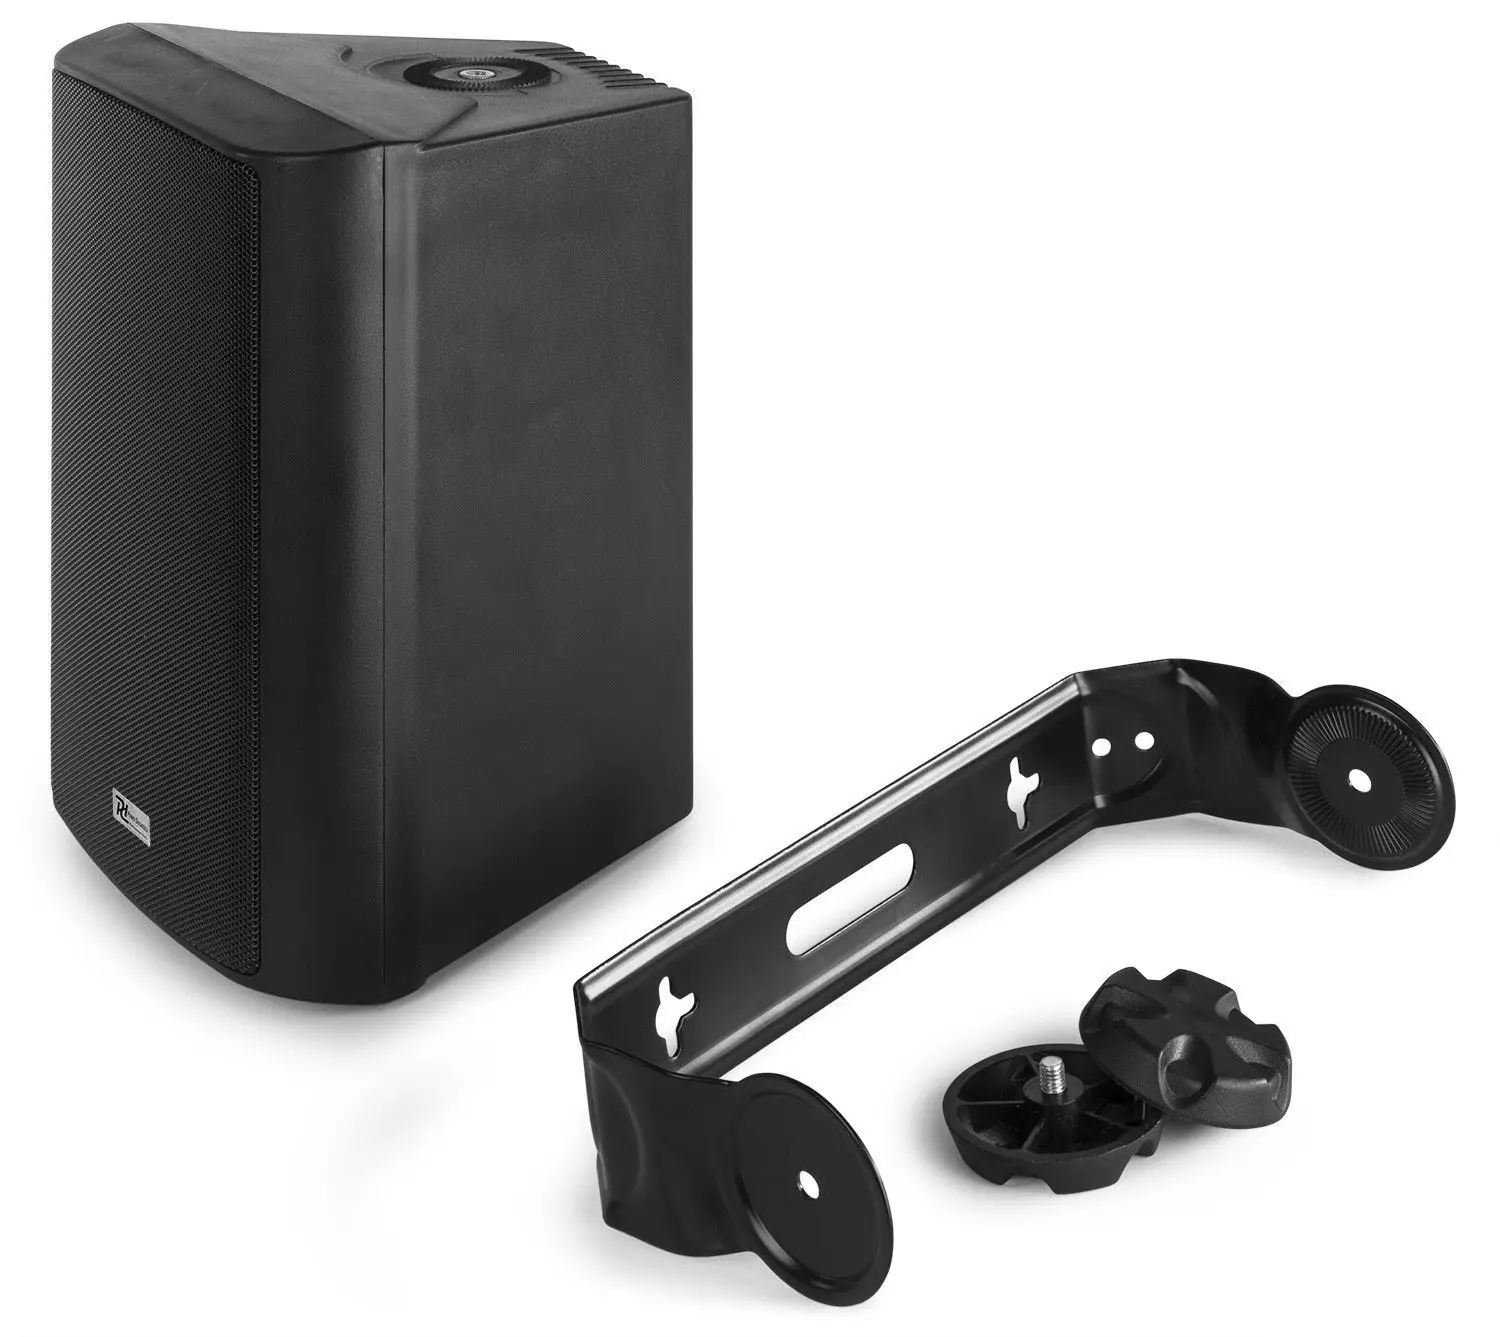 Power dynamics retourdeals installatie speakers|bluetooth speakers|hifi luidsprekers|installatie speakers|speakersets